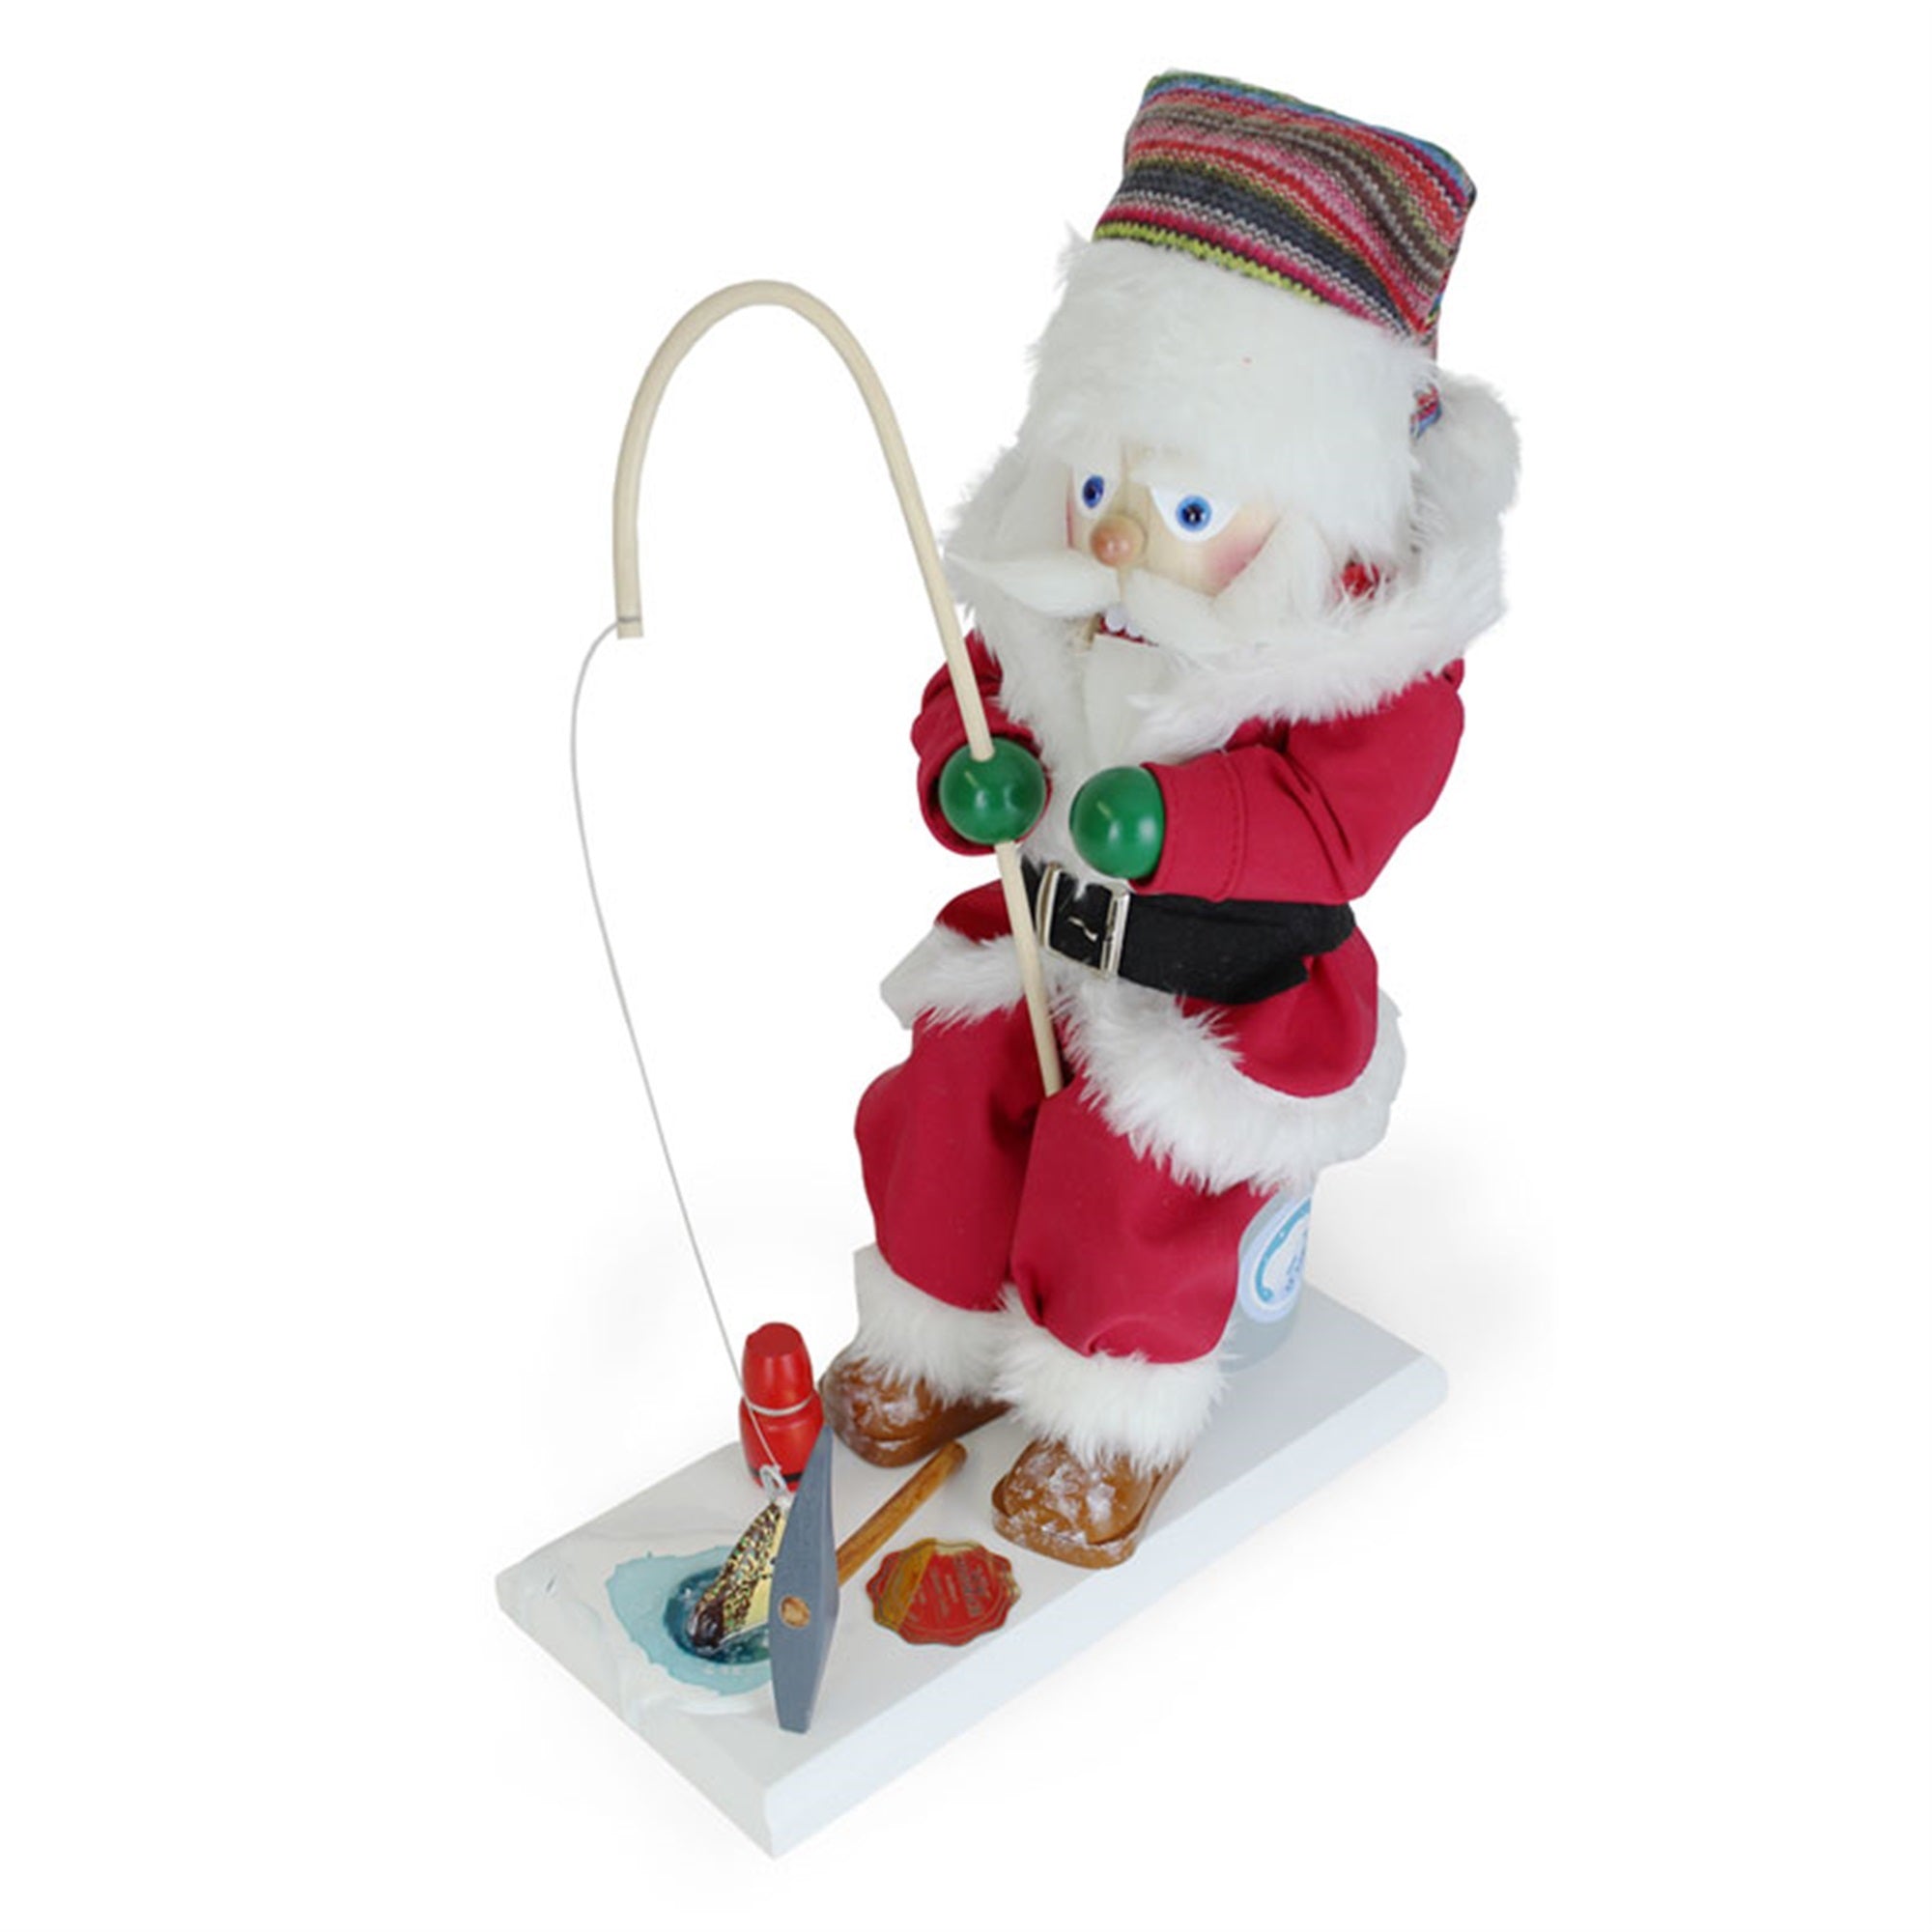 Steinbach Big Nutcracker Collection, First of Santas of the US Series, Alaska Santa, 15.75"